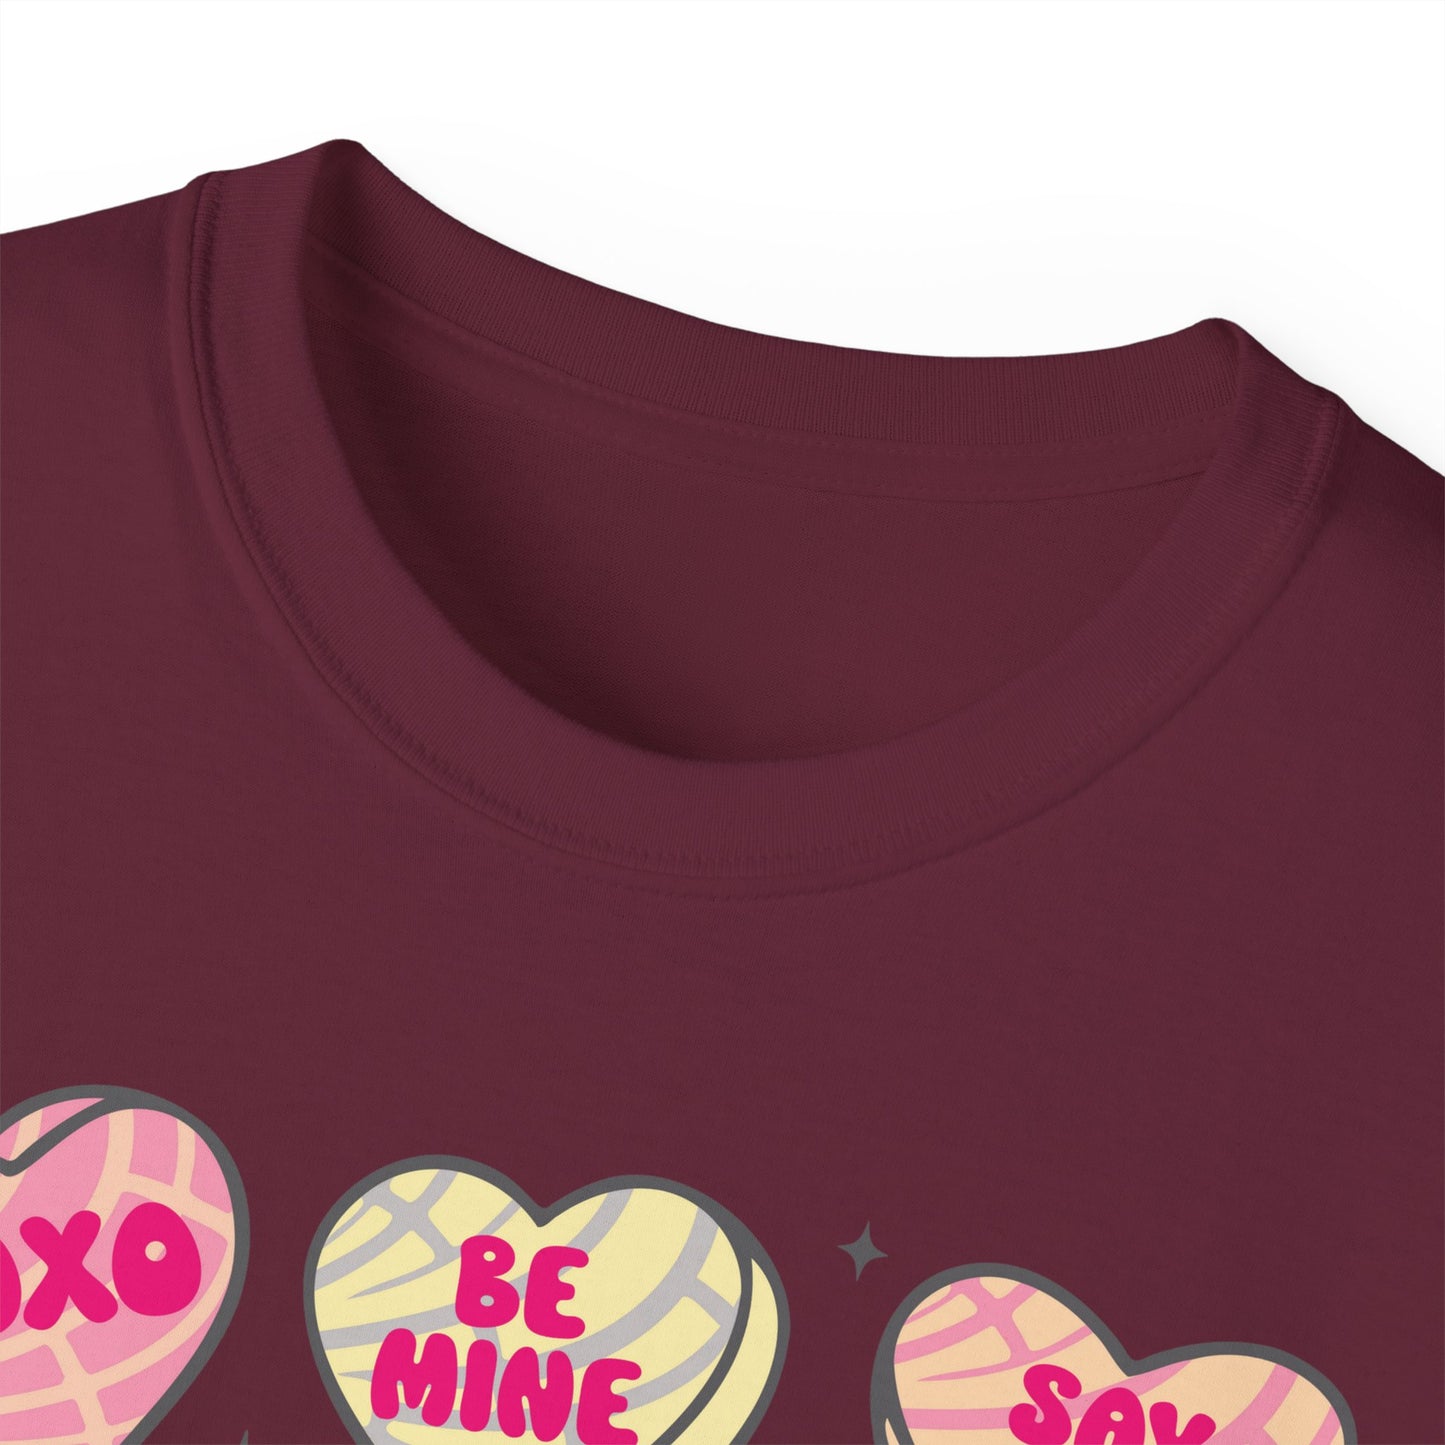 Besos de Amor ver 2 - Unisex t-shirt - Amor